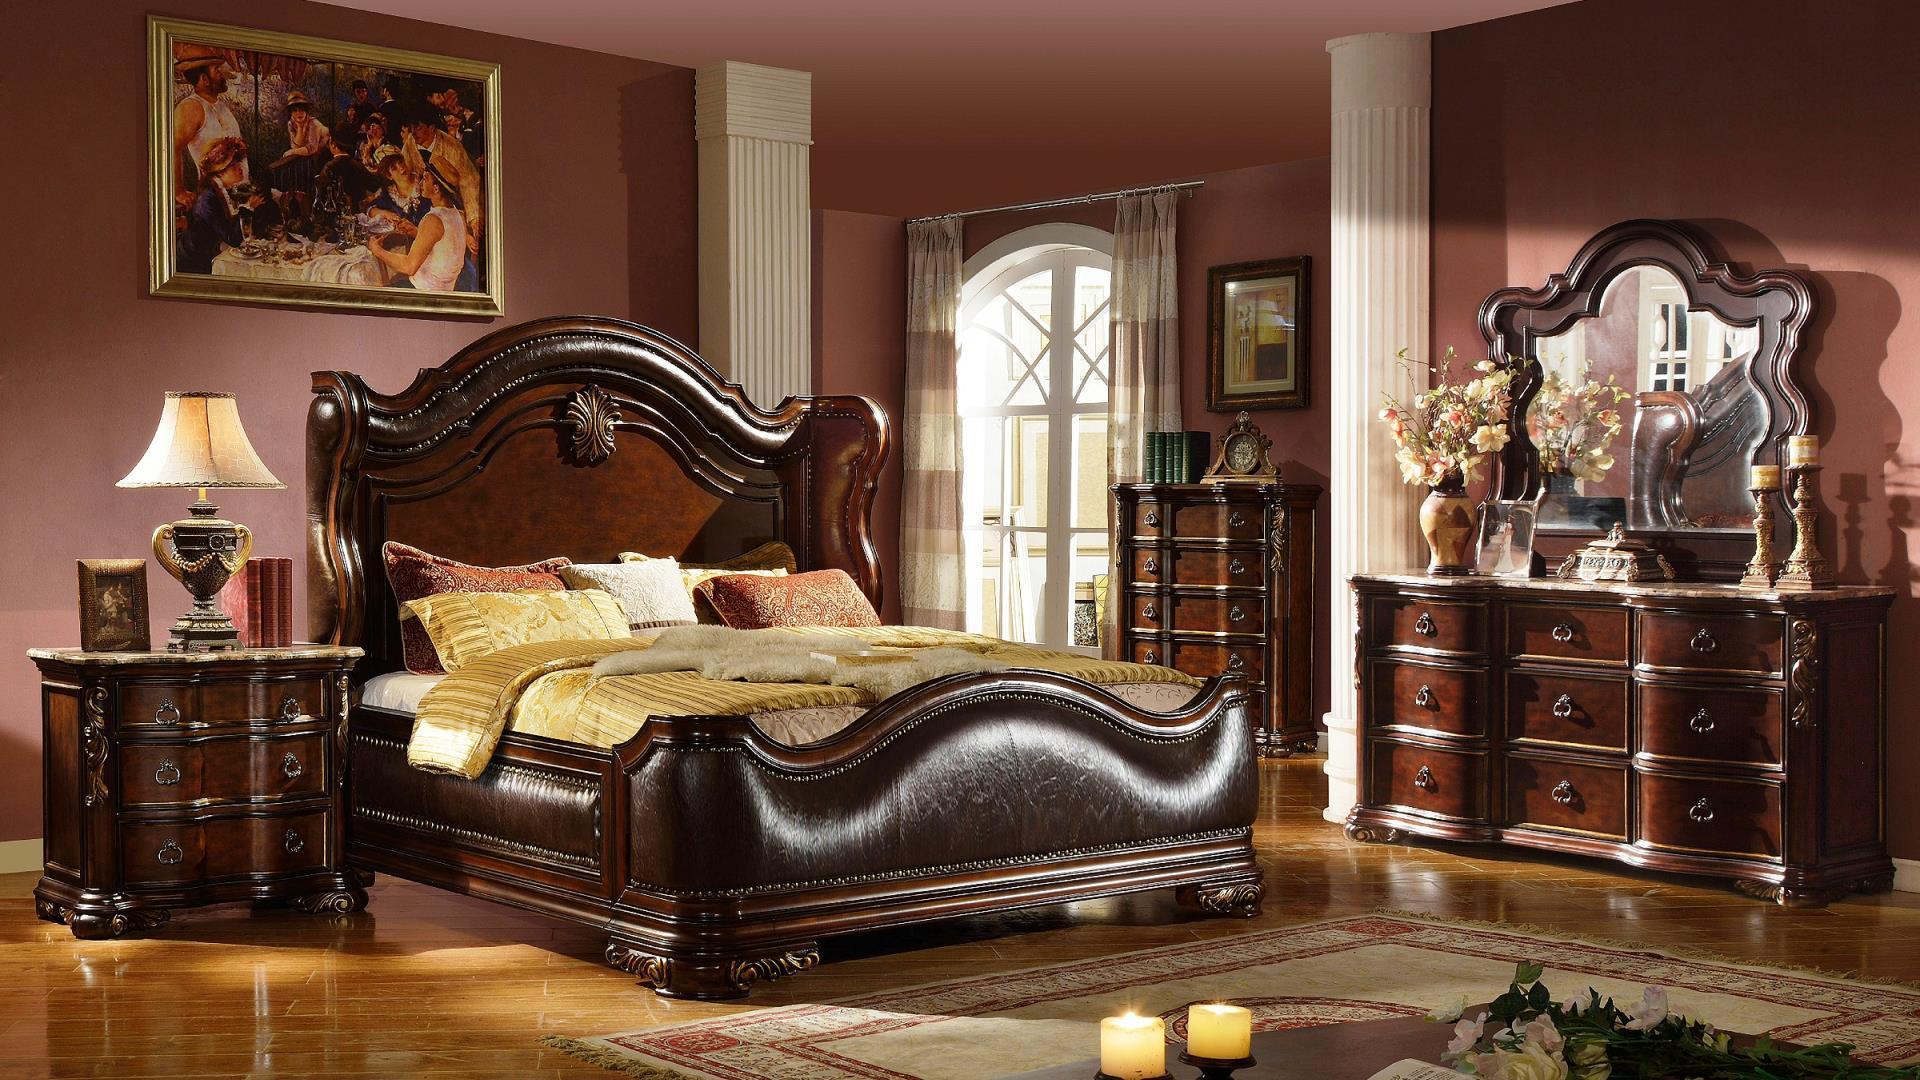 

    
Royal Dark Walnut Carved Wood King Bed Set 5Pcs BELLA Galaxy Home Traditional
